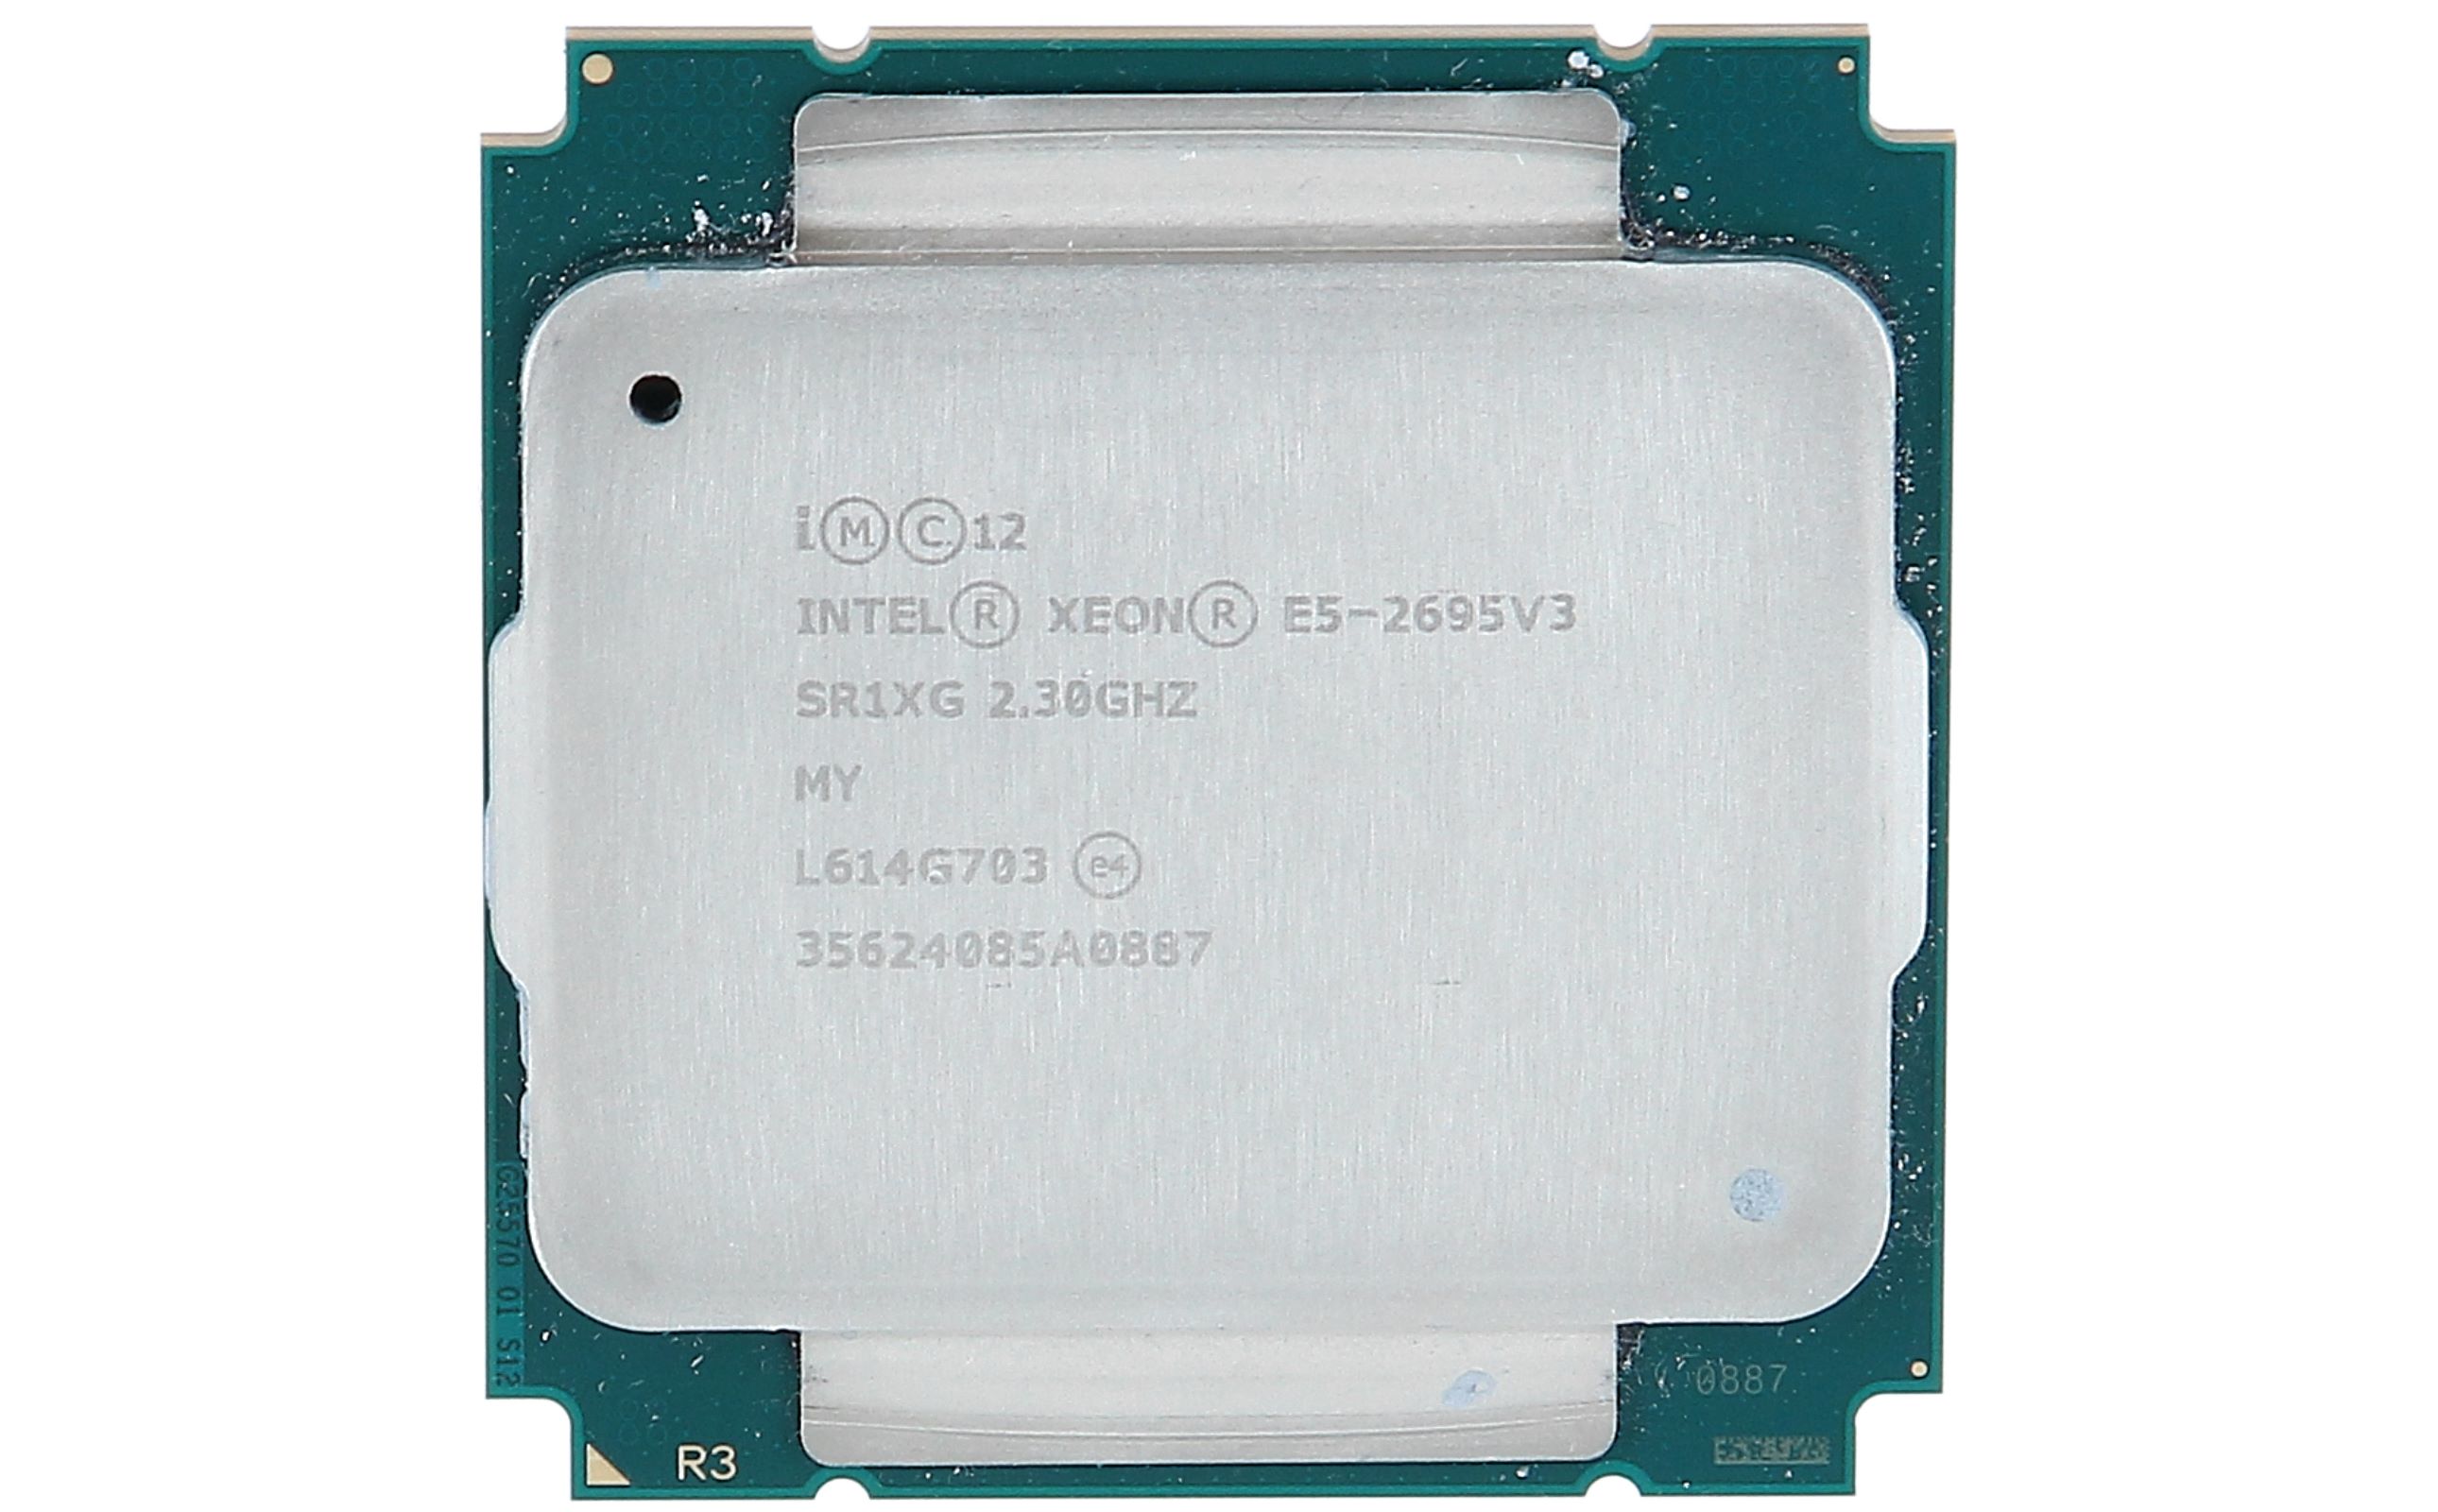 Intel r xeon r gold. Intel Xeon e5-2699 v4 lga2011-3, 22 x 2200 МГЦ. Процессор Intel Xeon e5-2699v4. E5 2699 v3. Intel Xeon e5-2699a v4 lga2011-3, 22 x 2400 МГЦ.